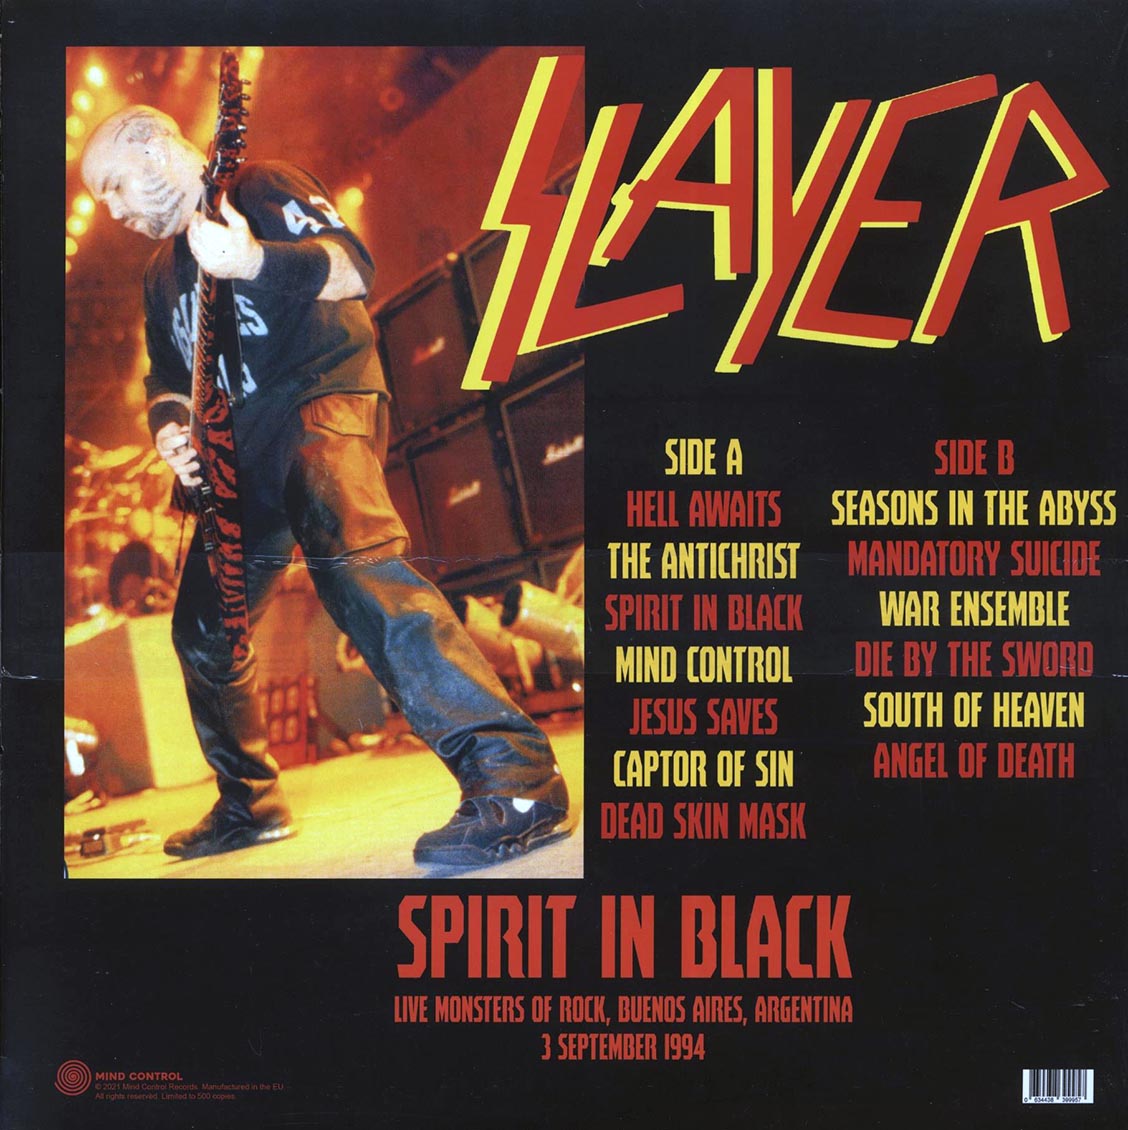 Slayer - Spirit In Black: Live Monsters Of Rock, Buenos Aires, Argentina 3 September 1994 (ltd. 500 copies made) - Vinyl LP, LP